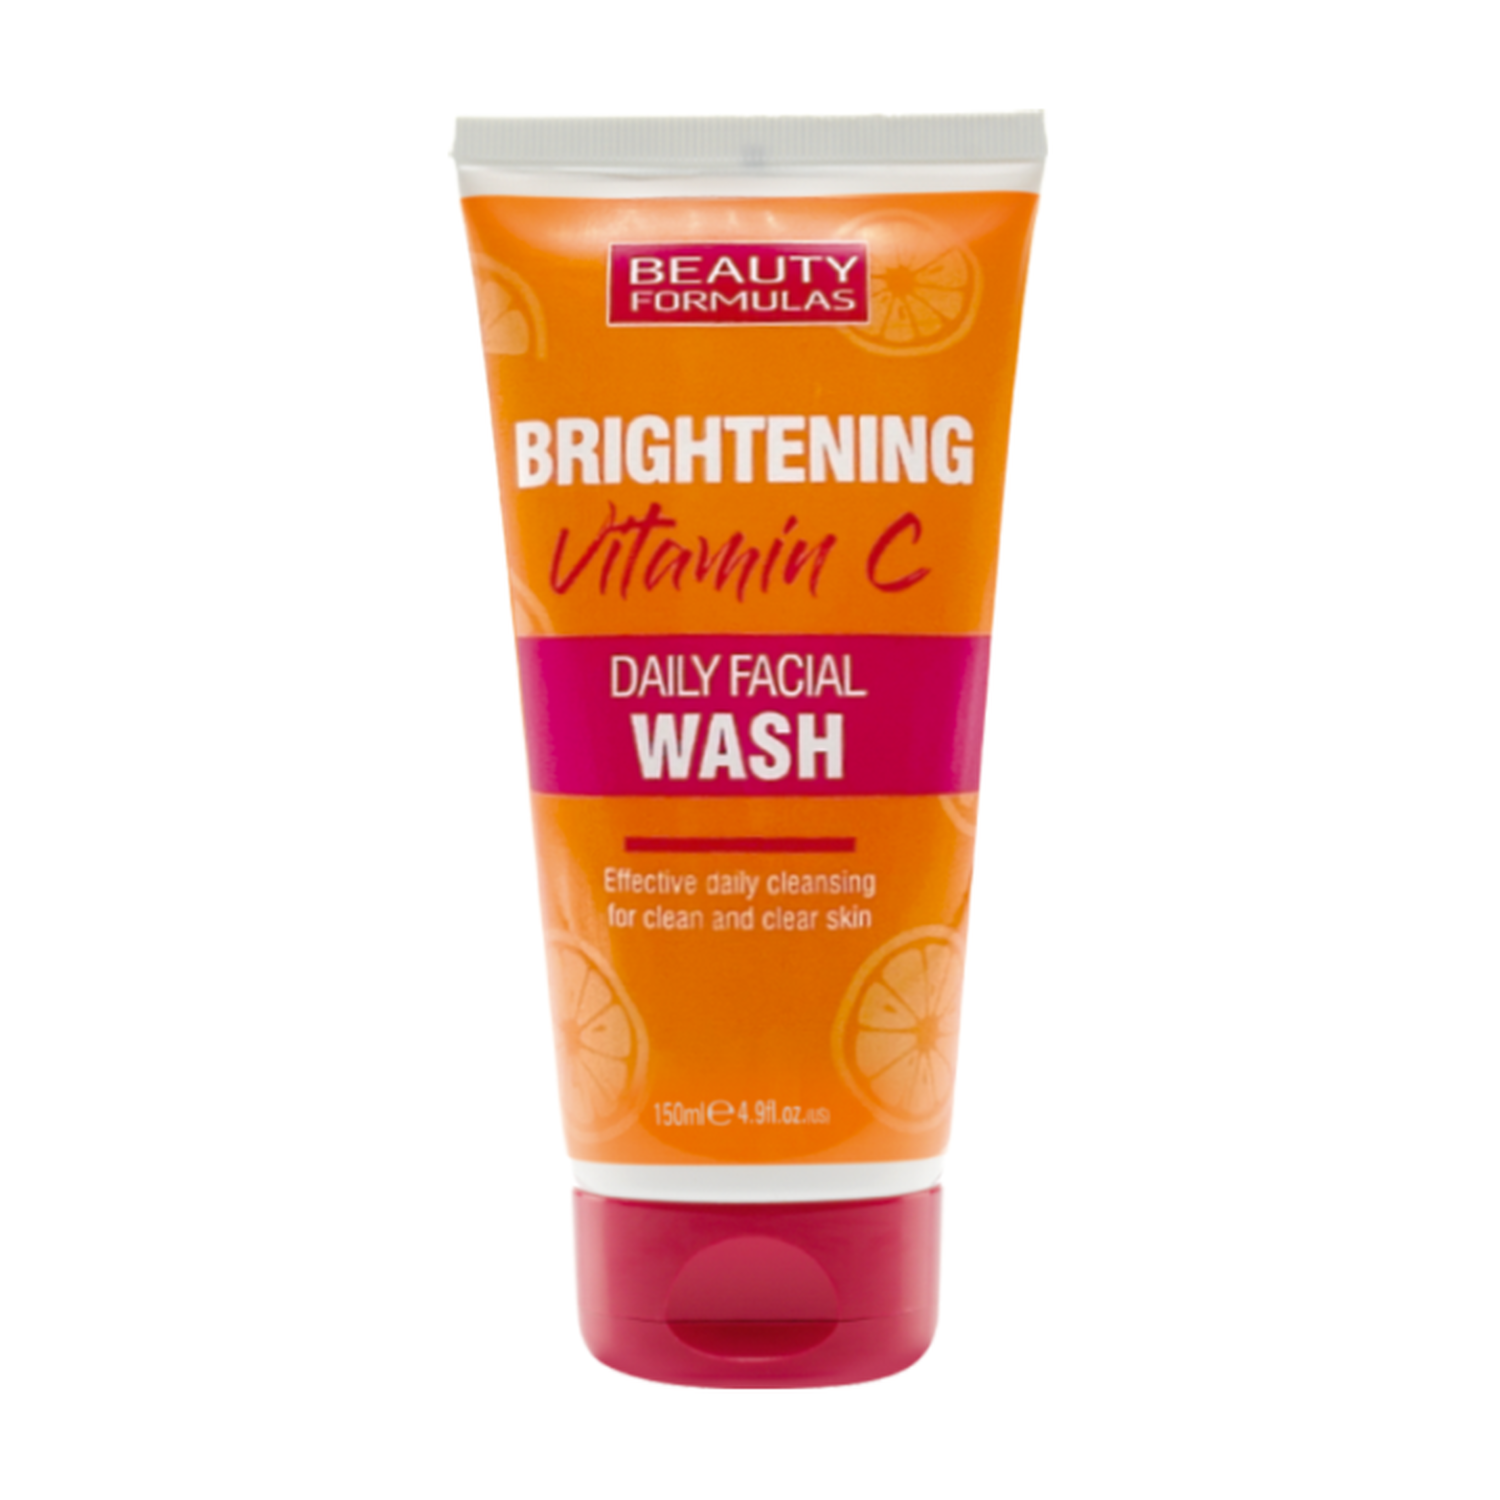 Brightening Vitamin C Daily Facial Wash - Orange Image